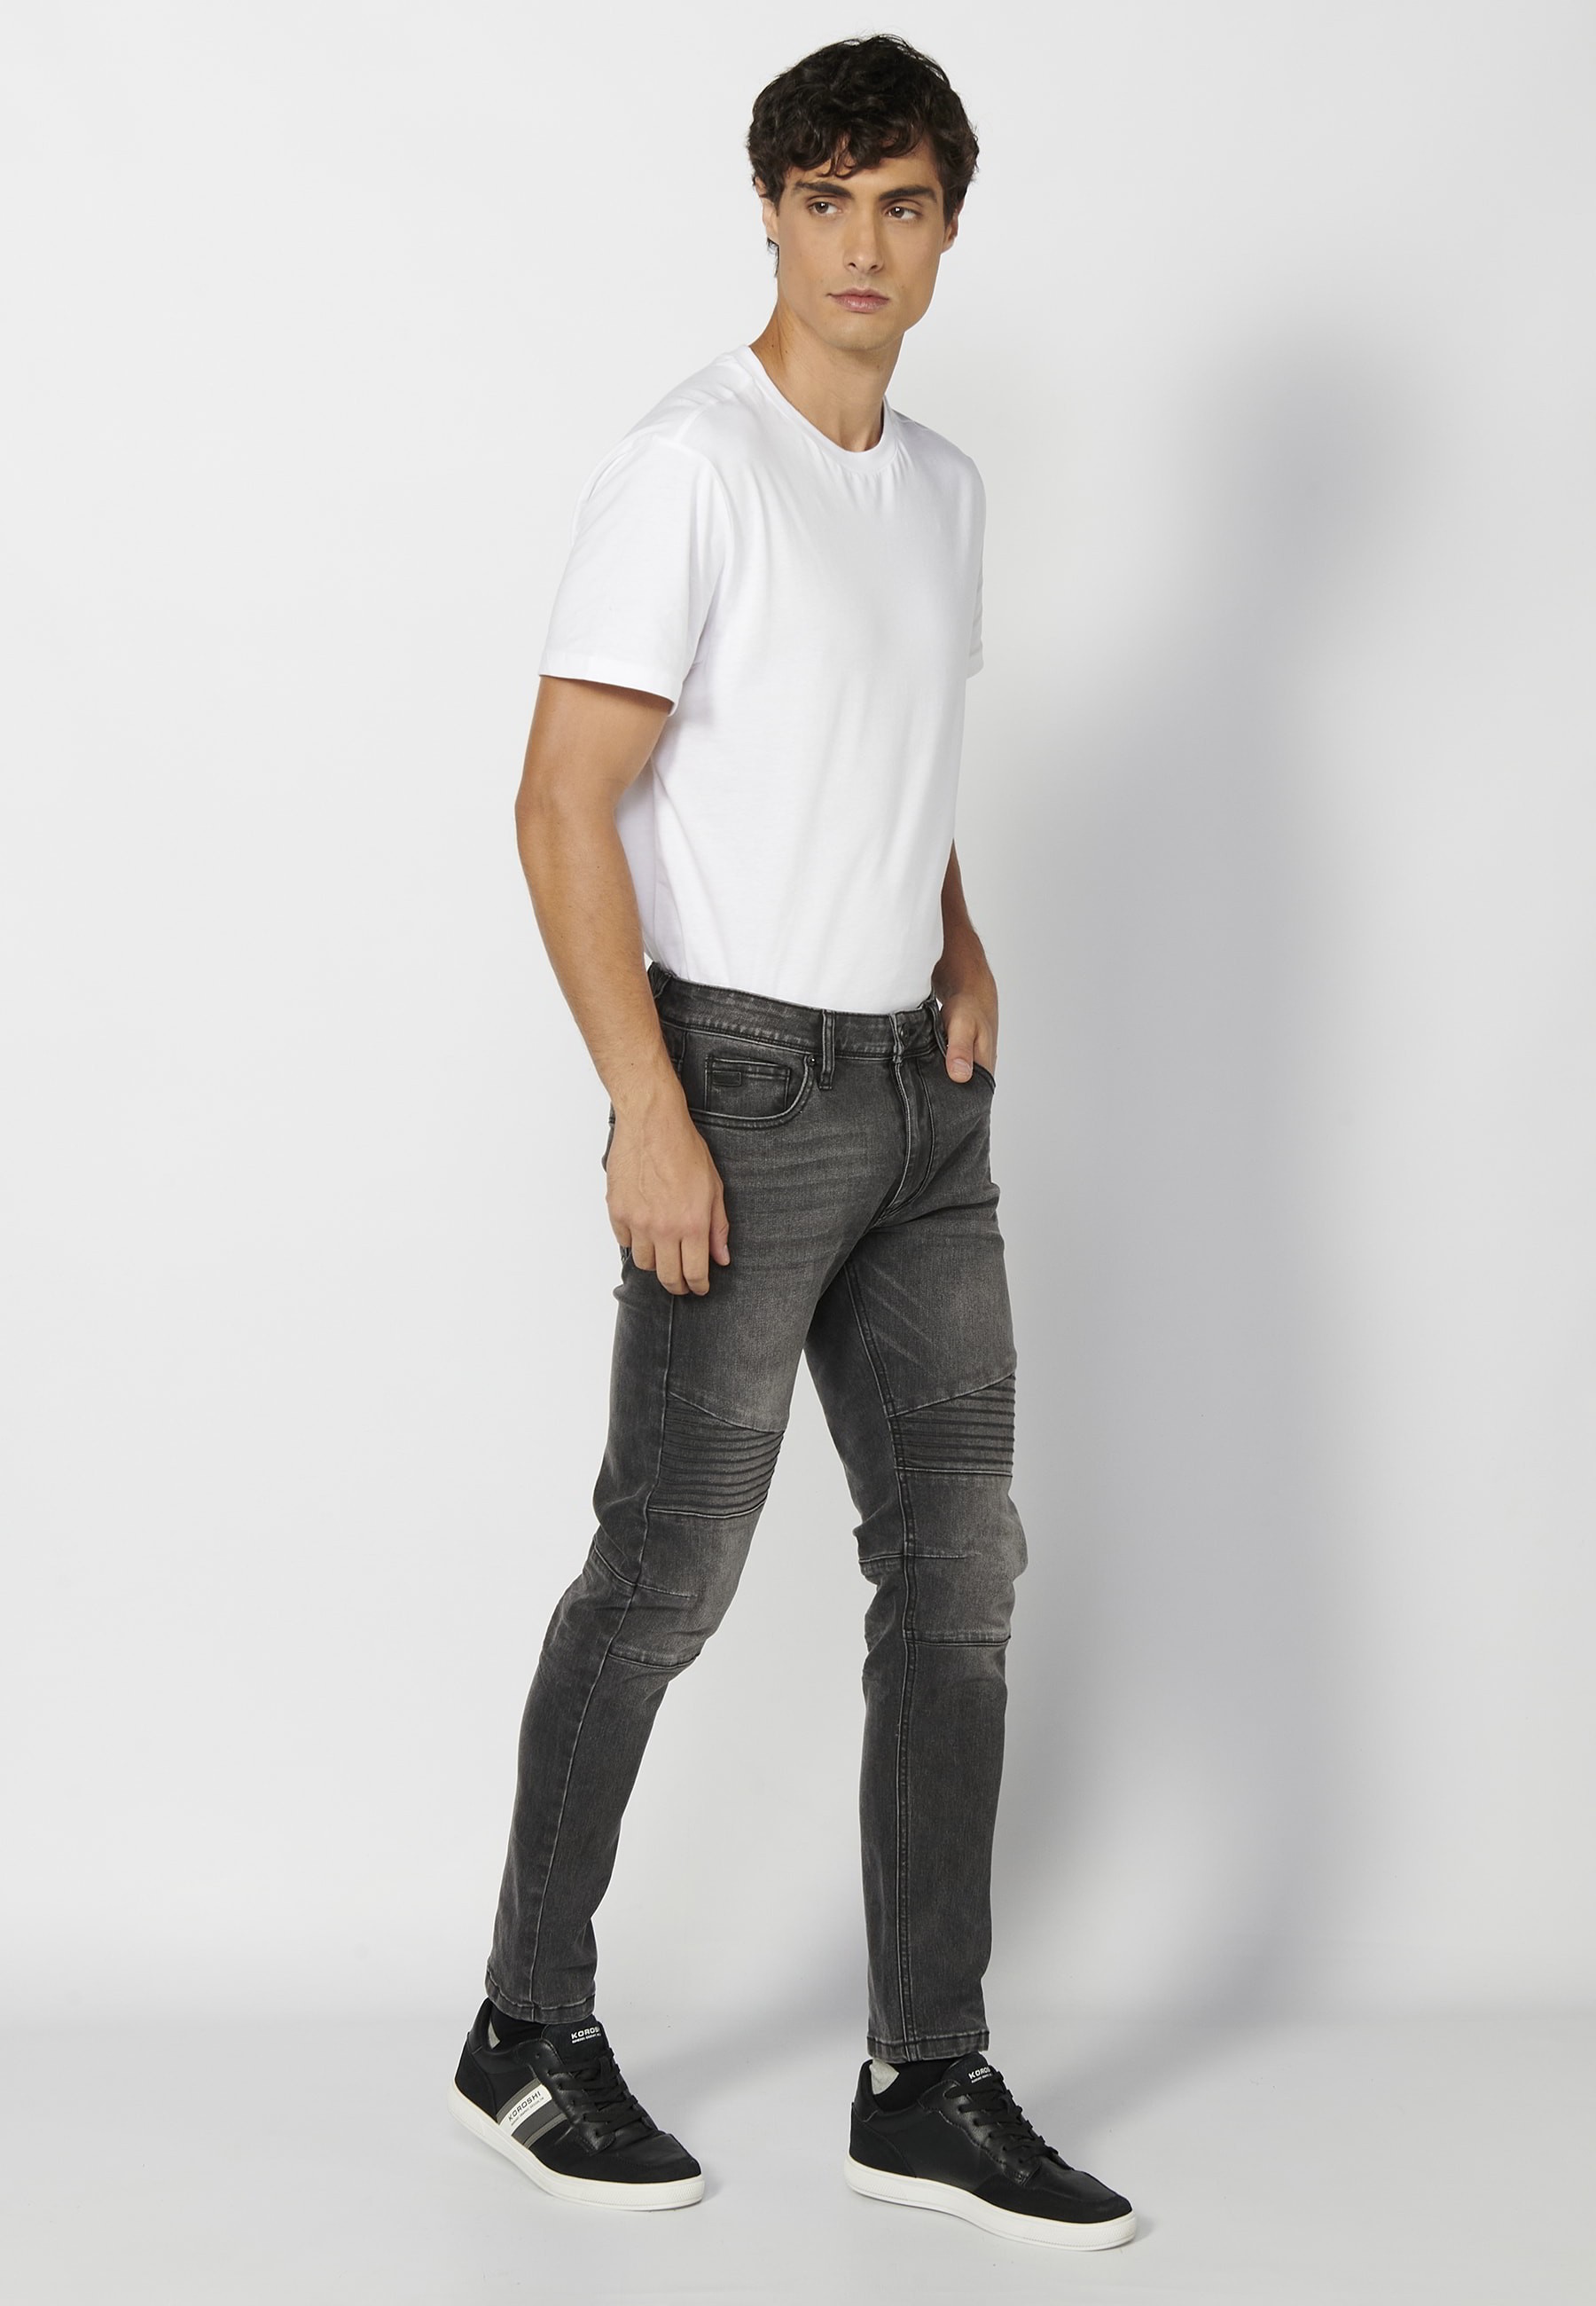 Long skinny fit pants, with five pockets, worn black color for Men